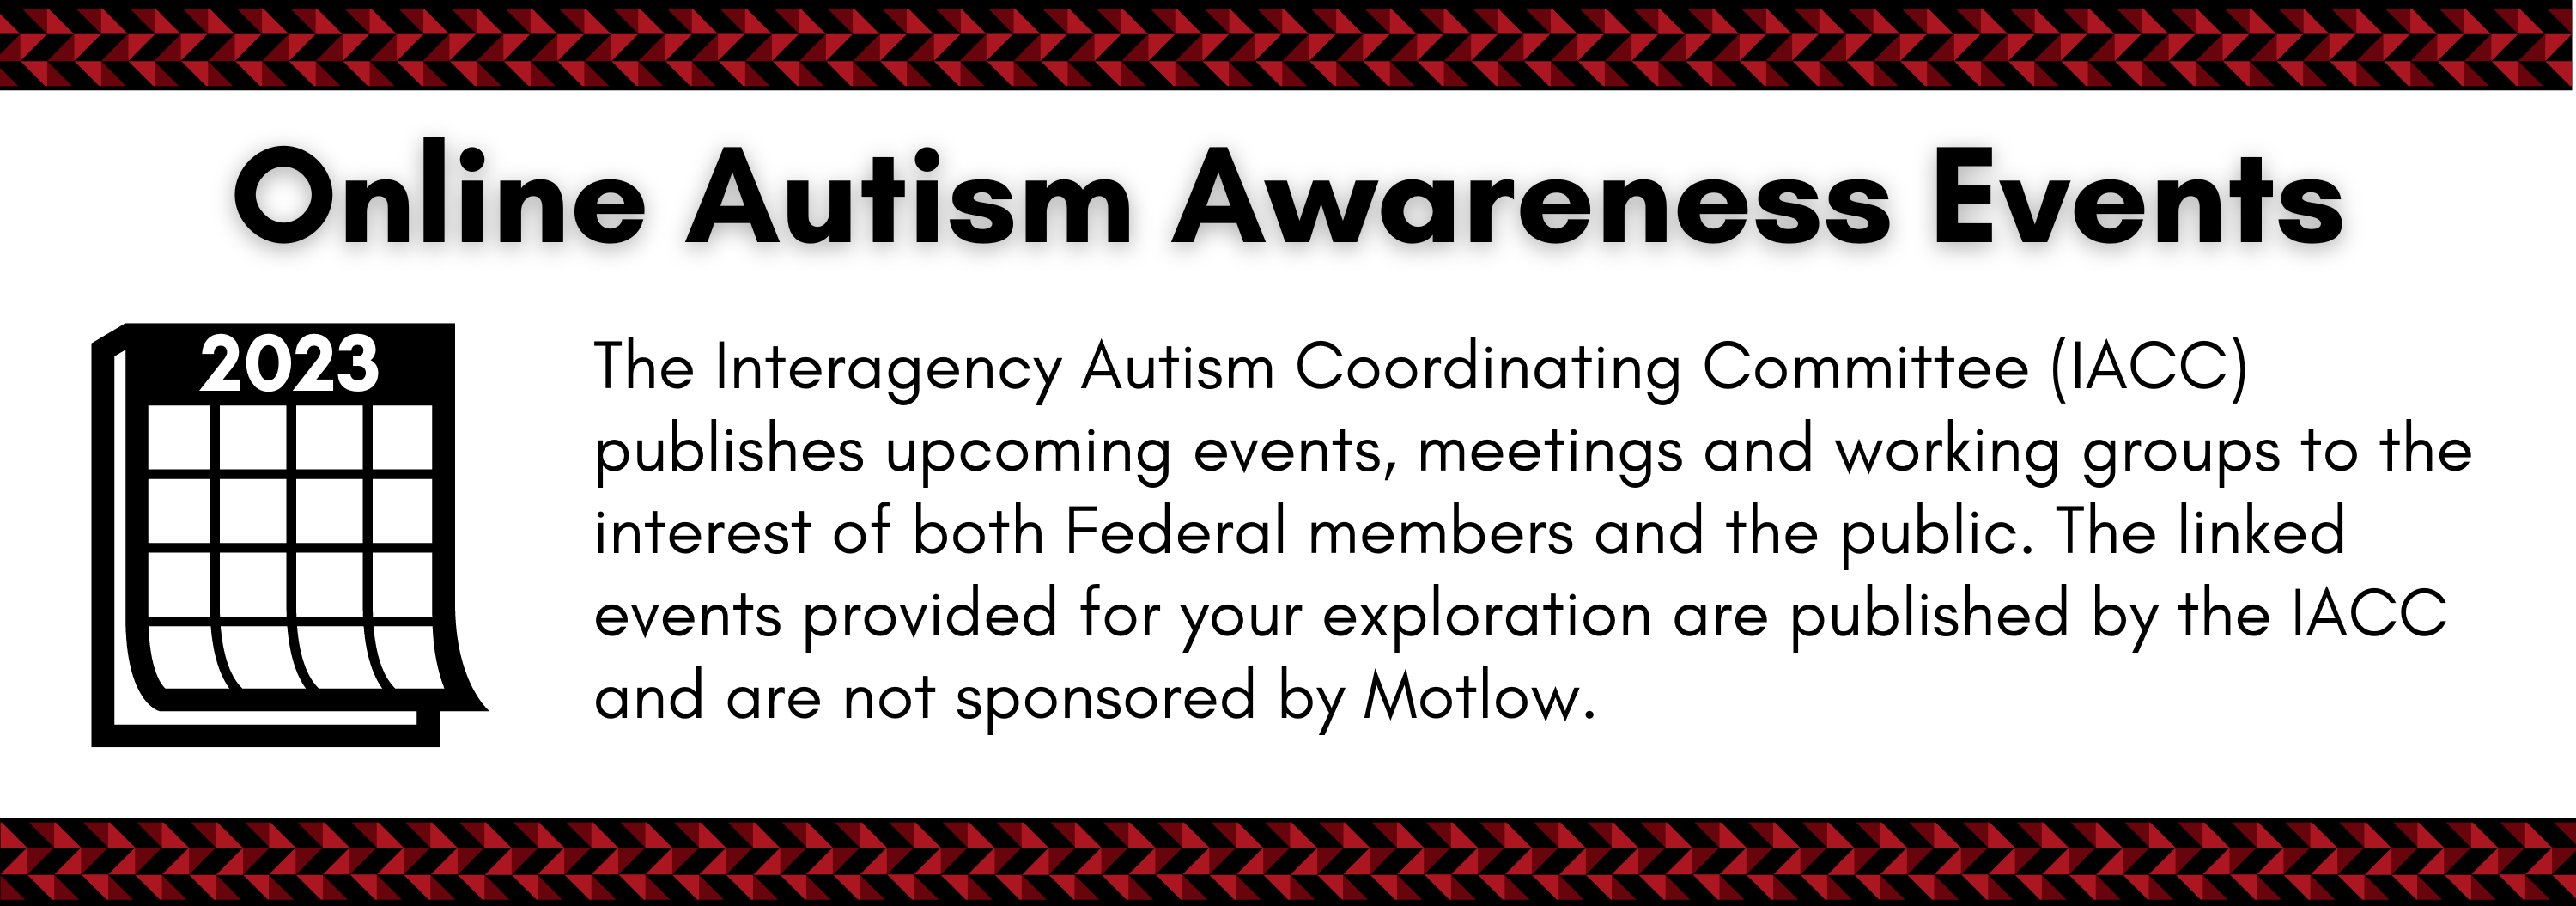 autism online events